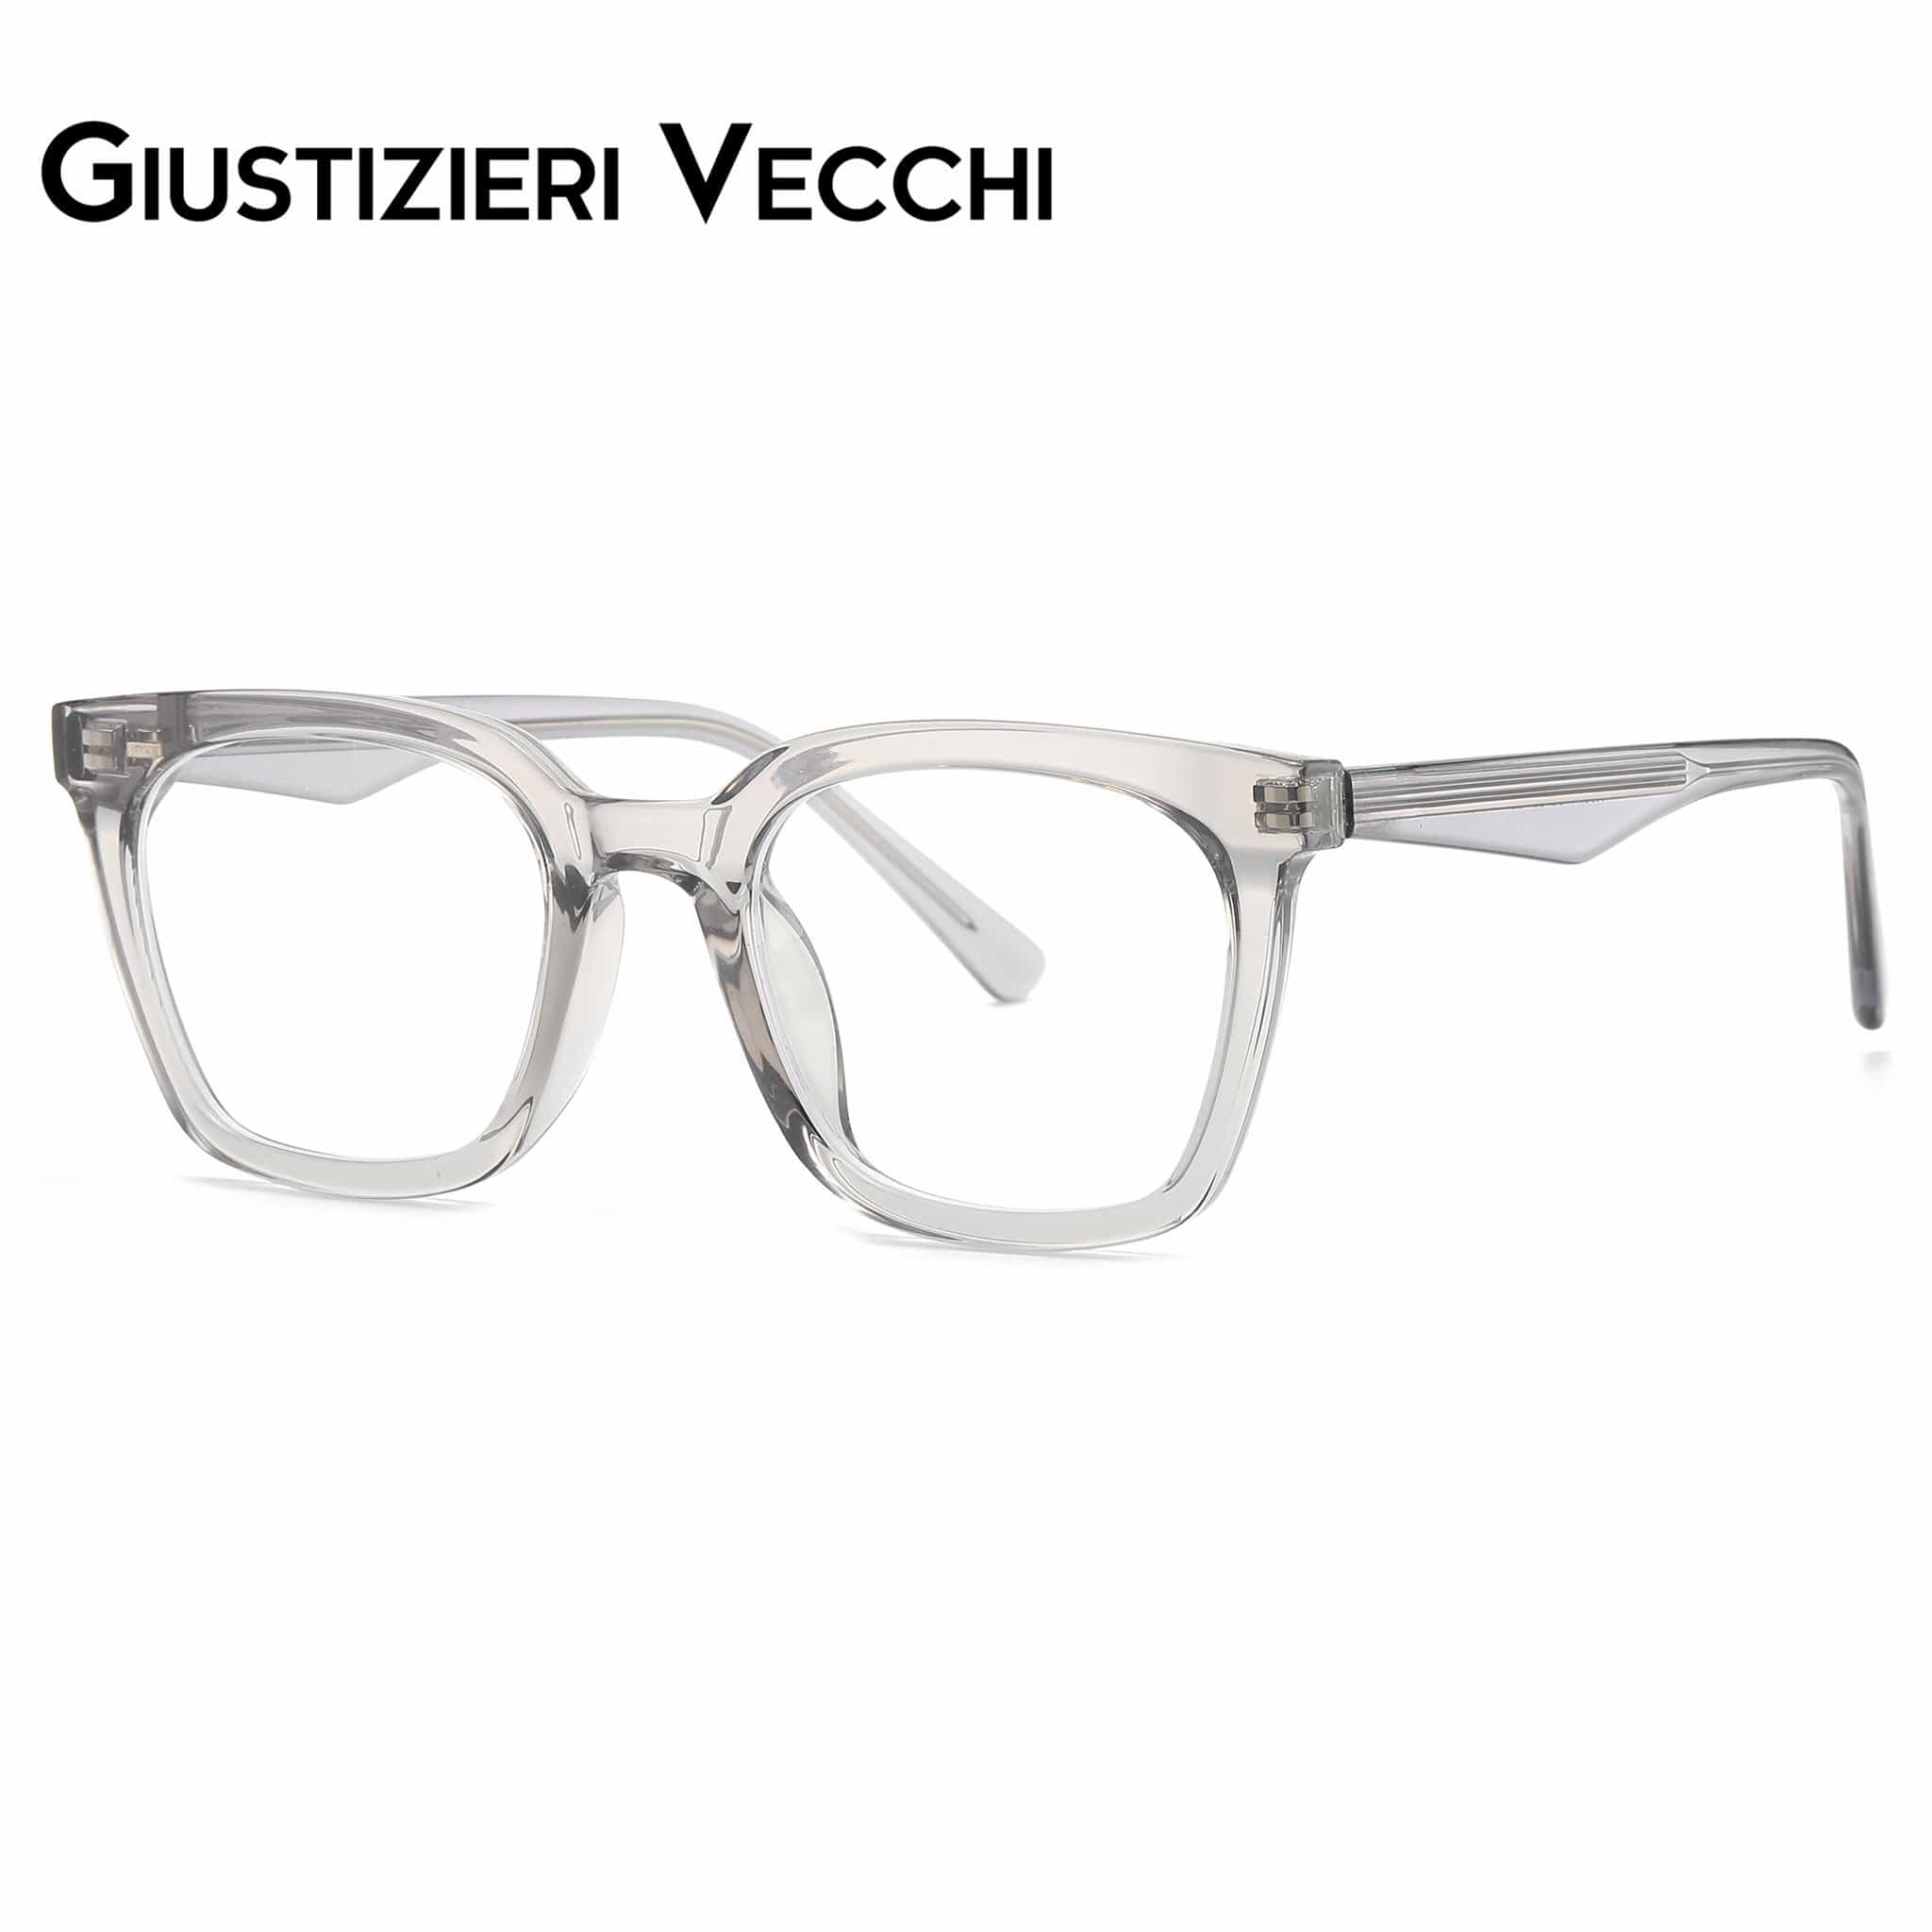 GIUSTIZIERI VECCHI Eyeglasses PhantomPulse Duo